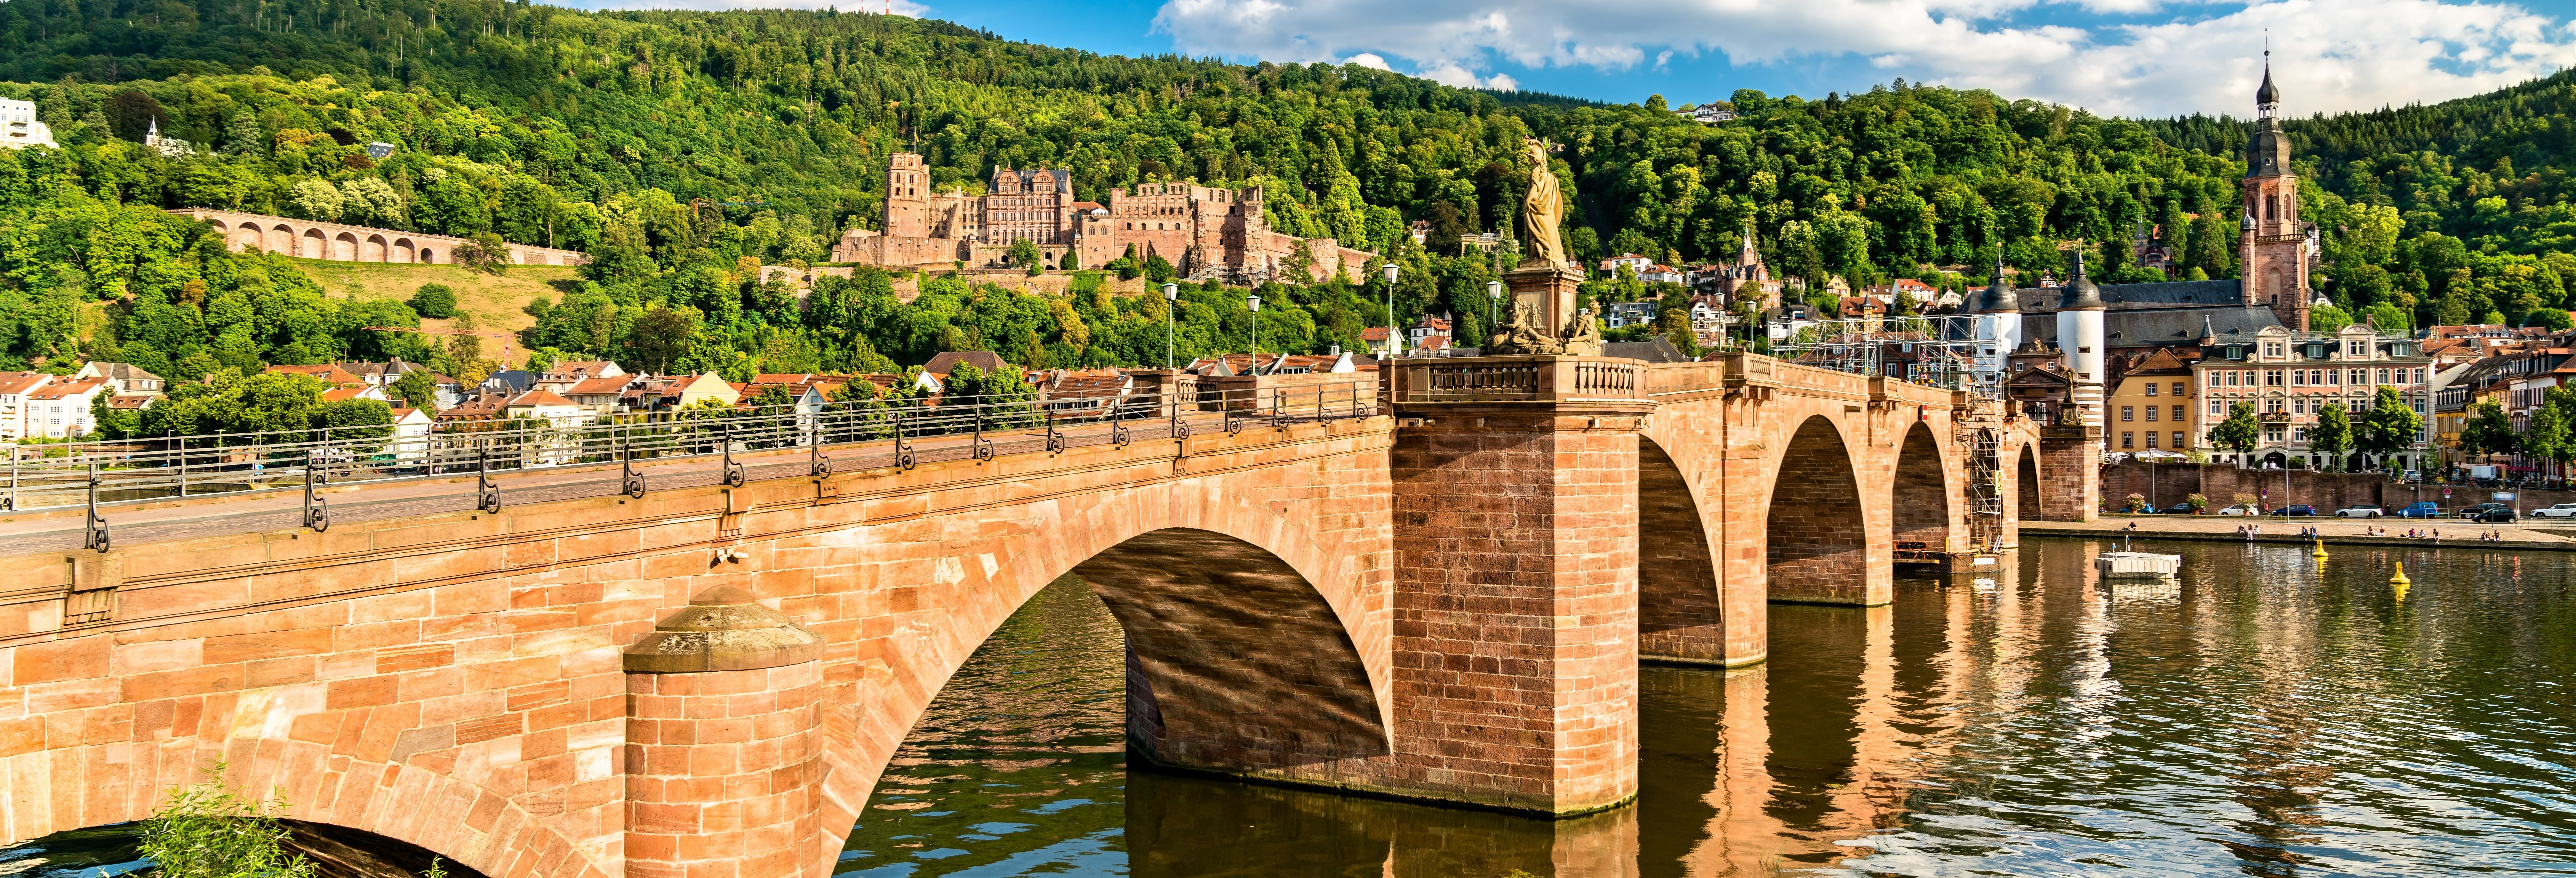 Excursão a Heidelberg